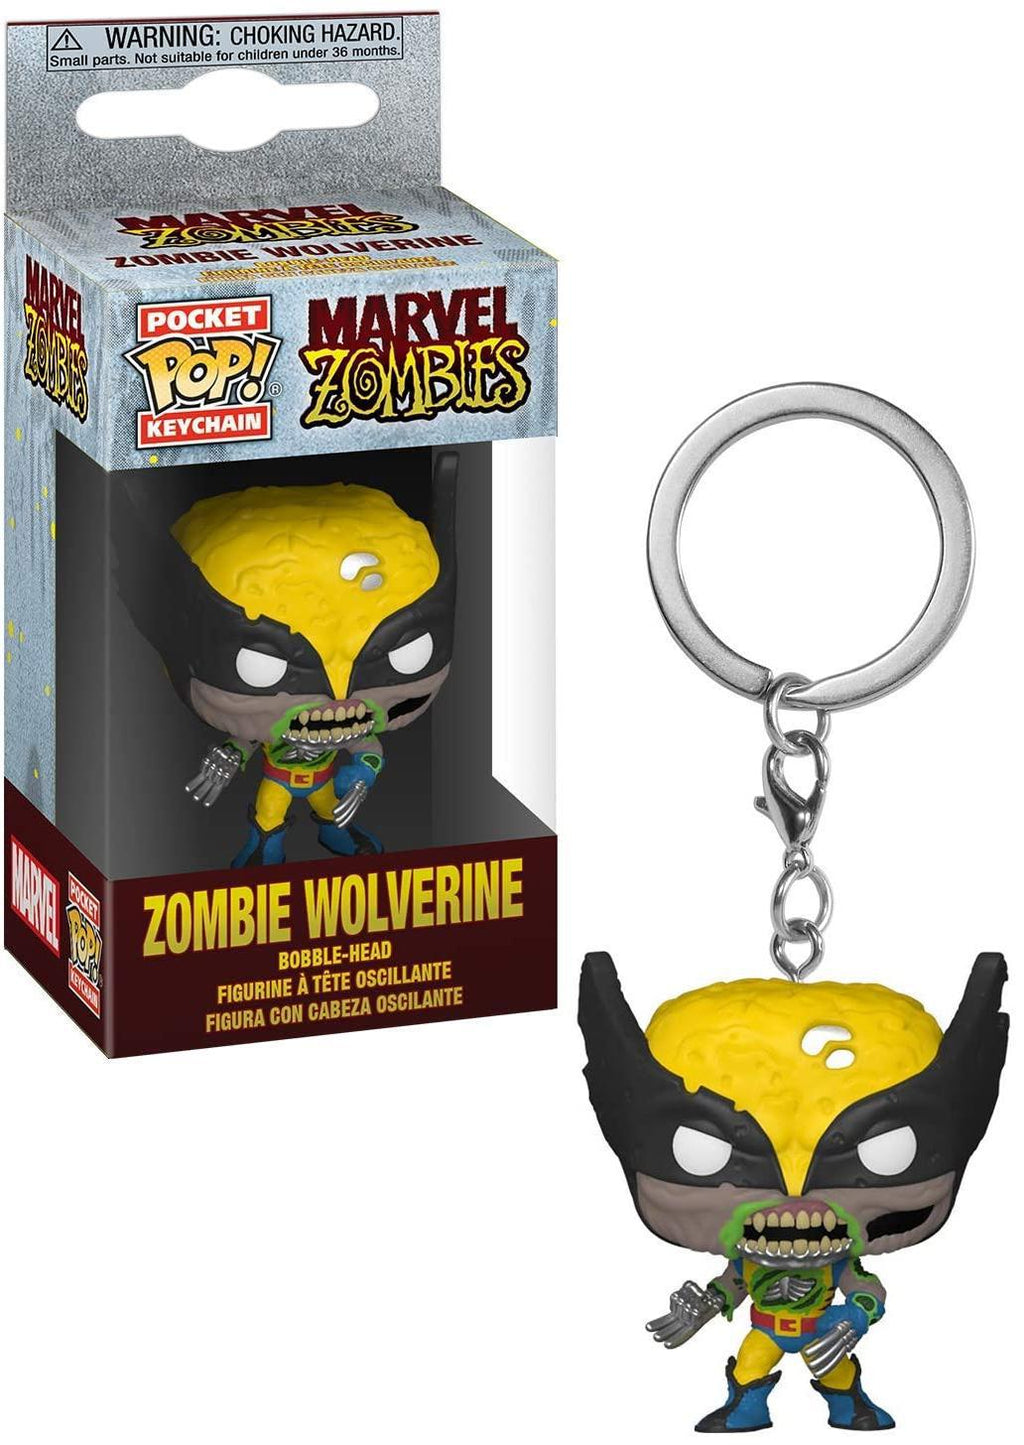 Pocket Pop Marvel Zombies Zombie Wolverine Vinyl Key Chain